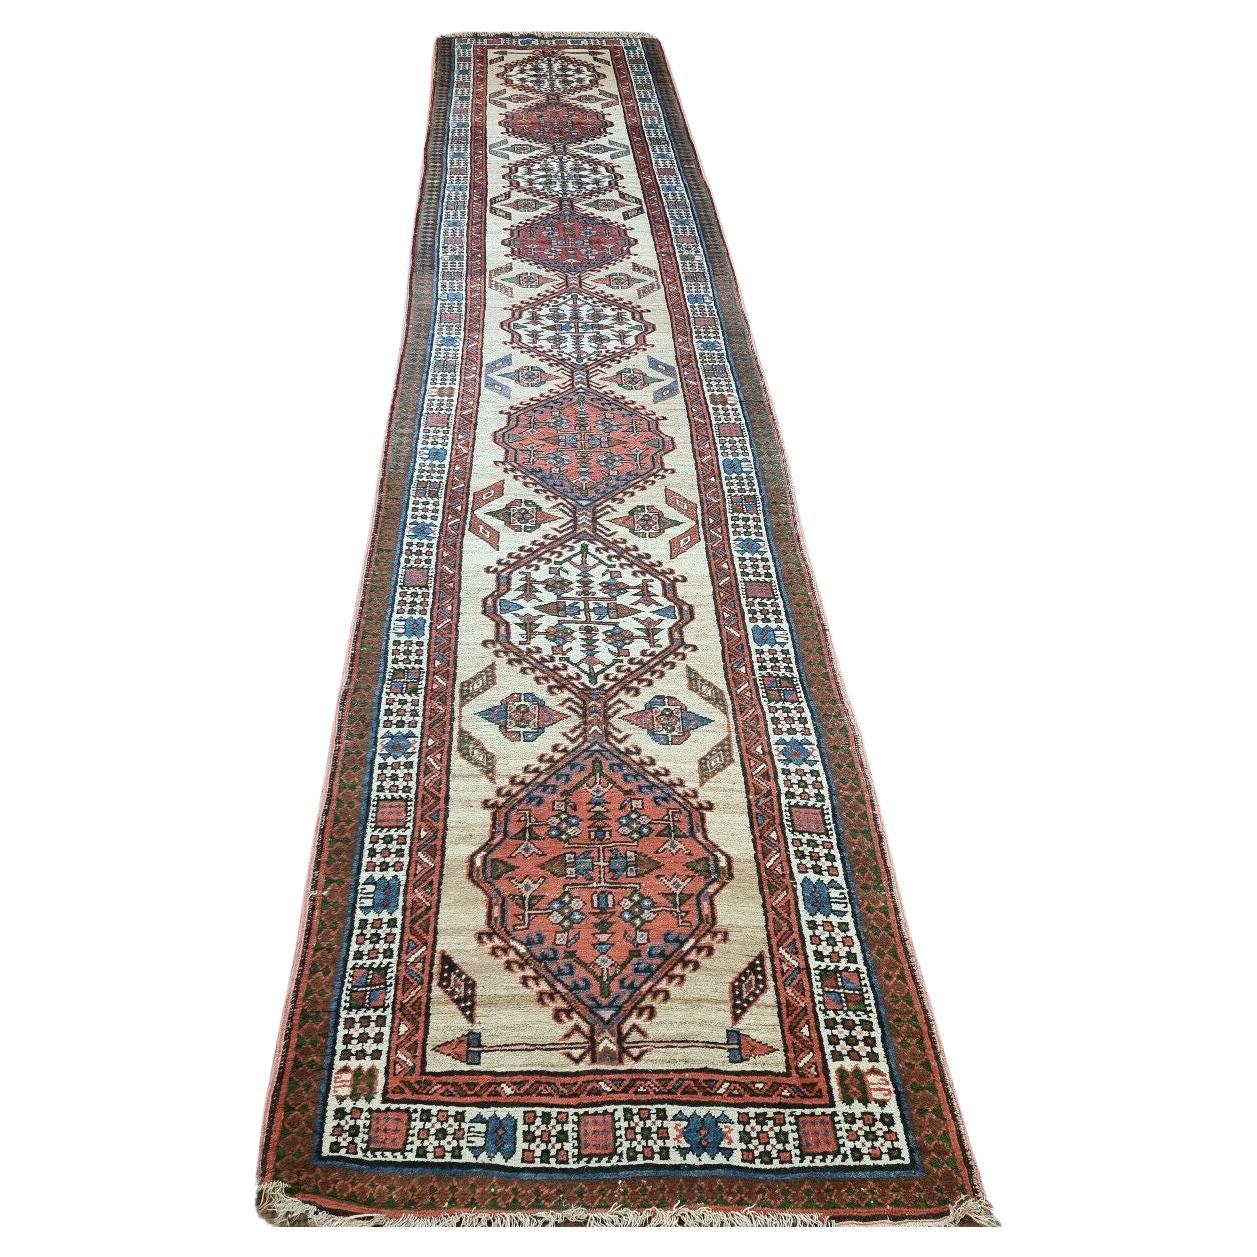 Handmade Antique Persian Style Serab Runner Rug 3.2' x 14.9', 1900s - 1D101 For Sale